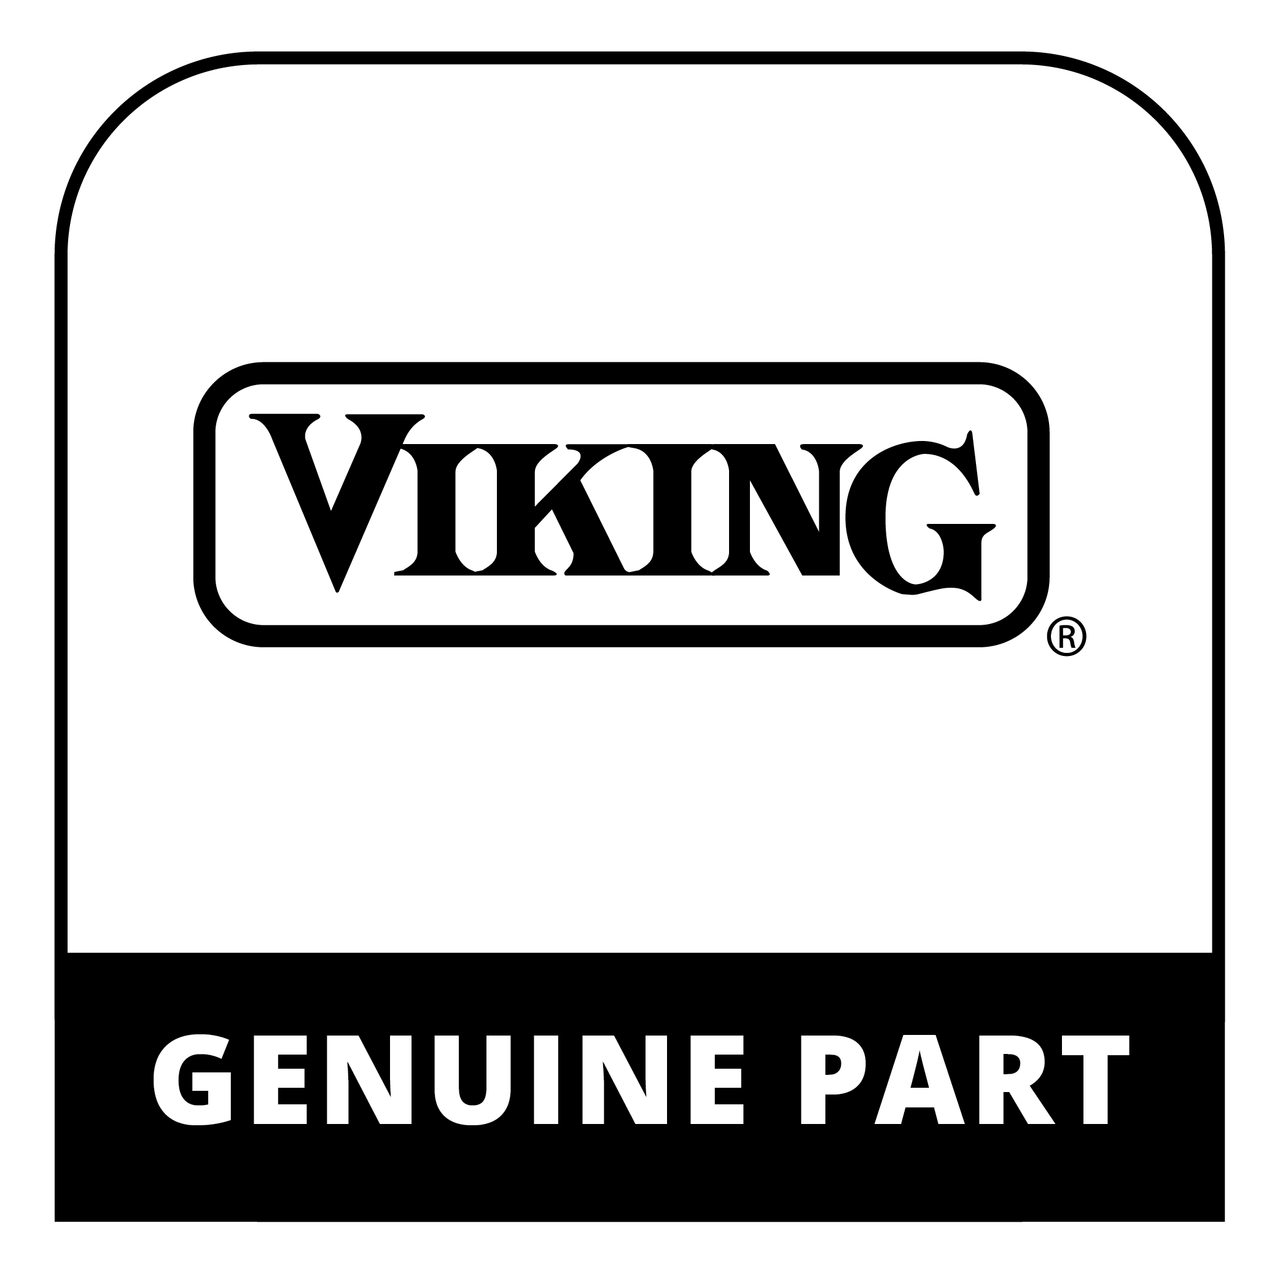 Viking 042259-000 - PWR, INLET, APPLIANCE, IEC, C1 - Genuine Viking Part